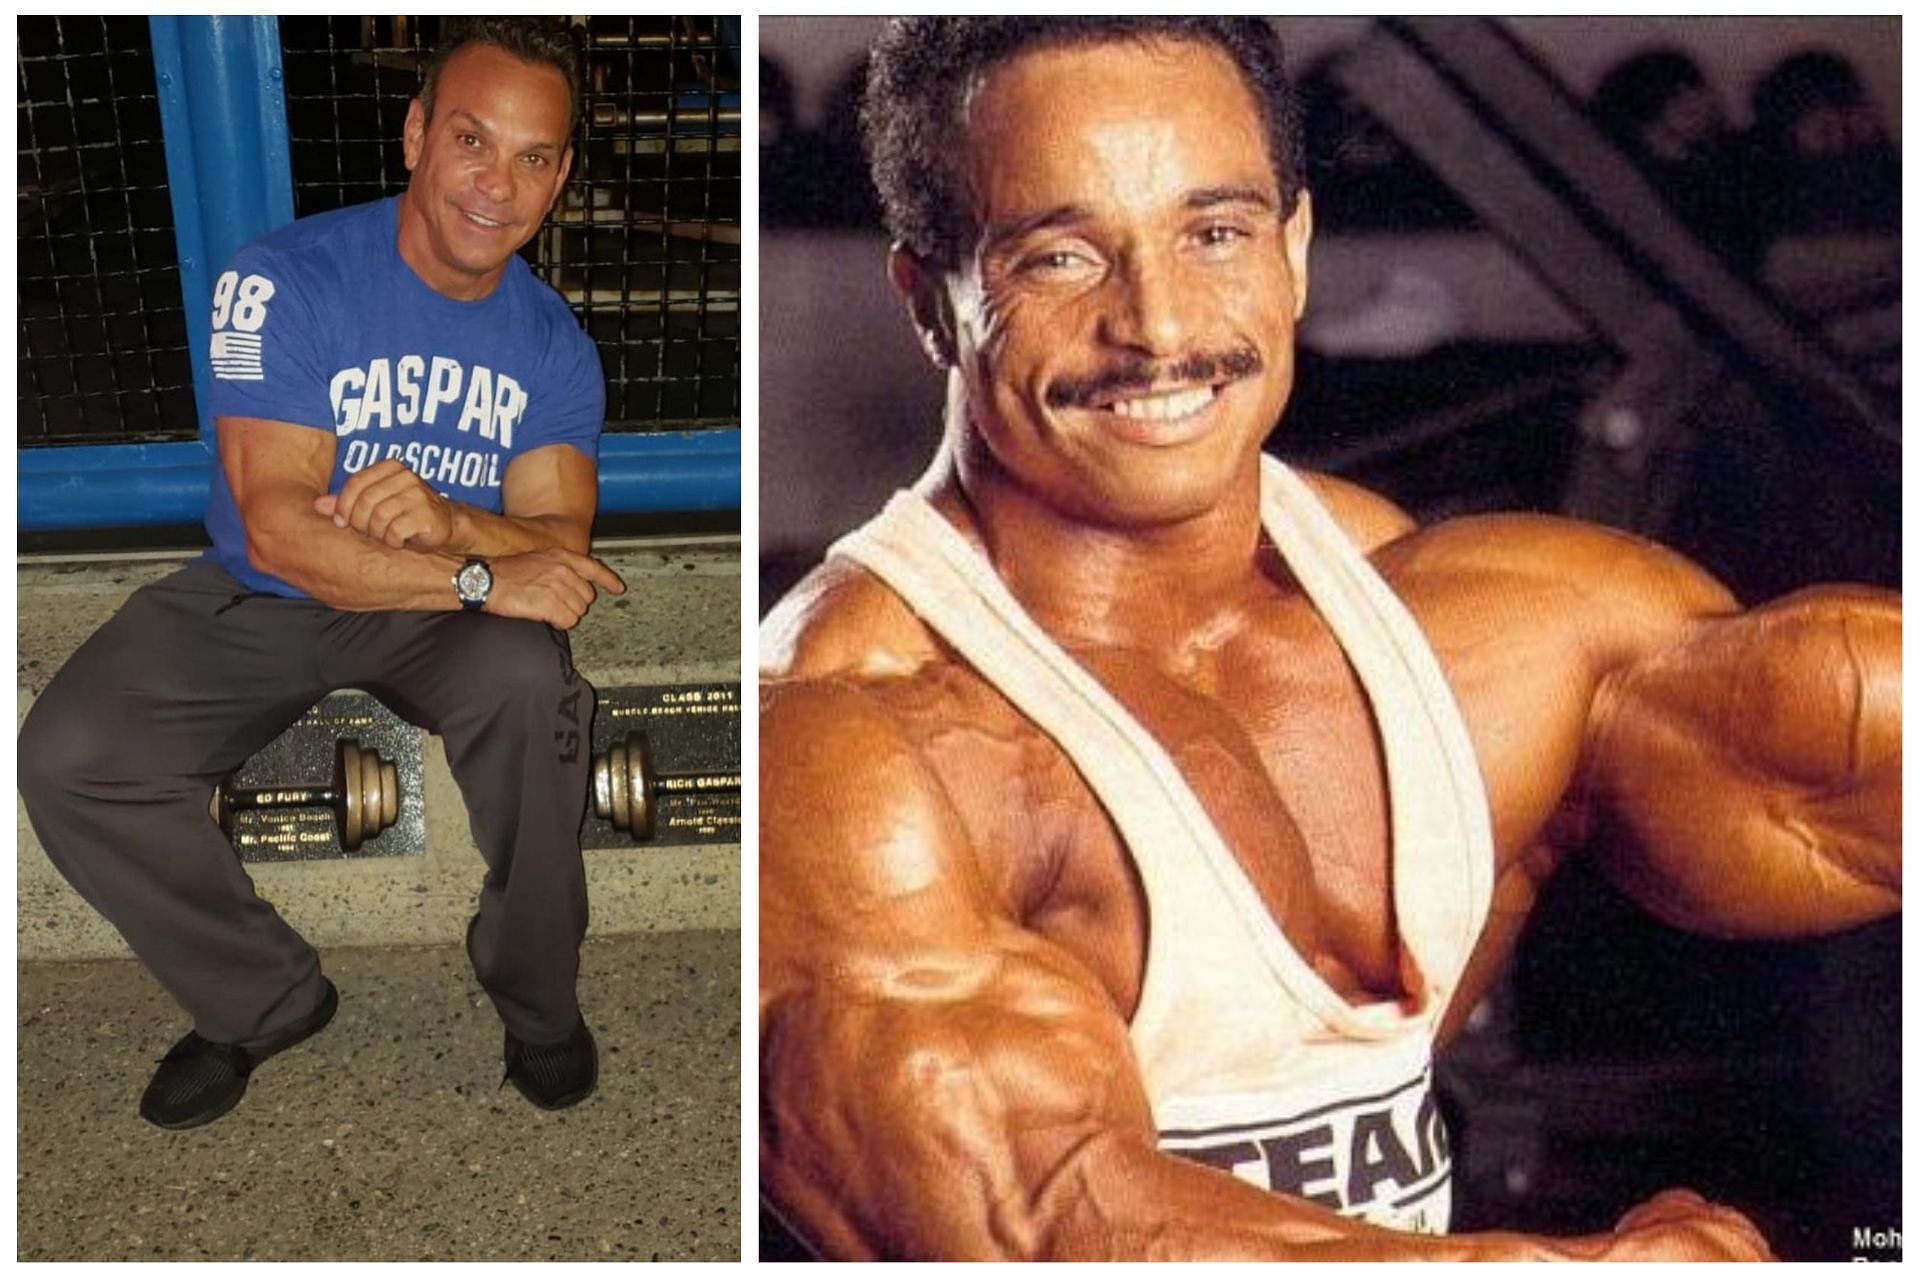 Rich Gaspari weighs in on the tragic death of professional bodybuilder 